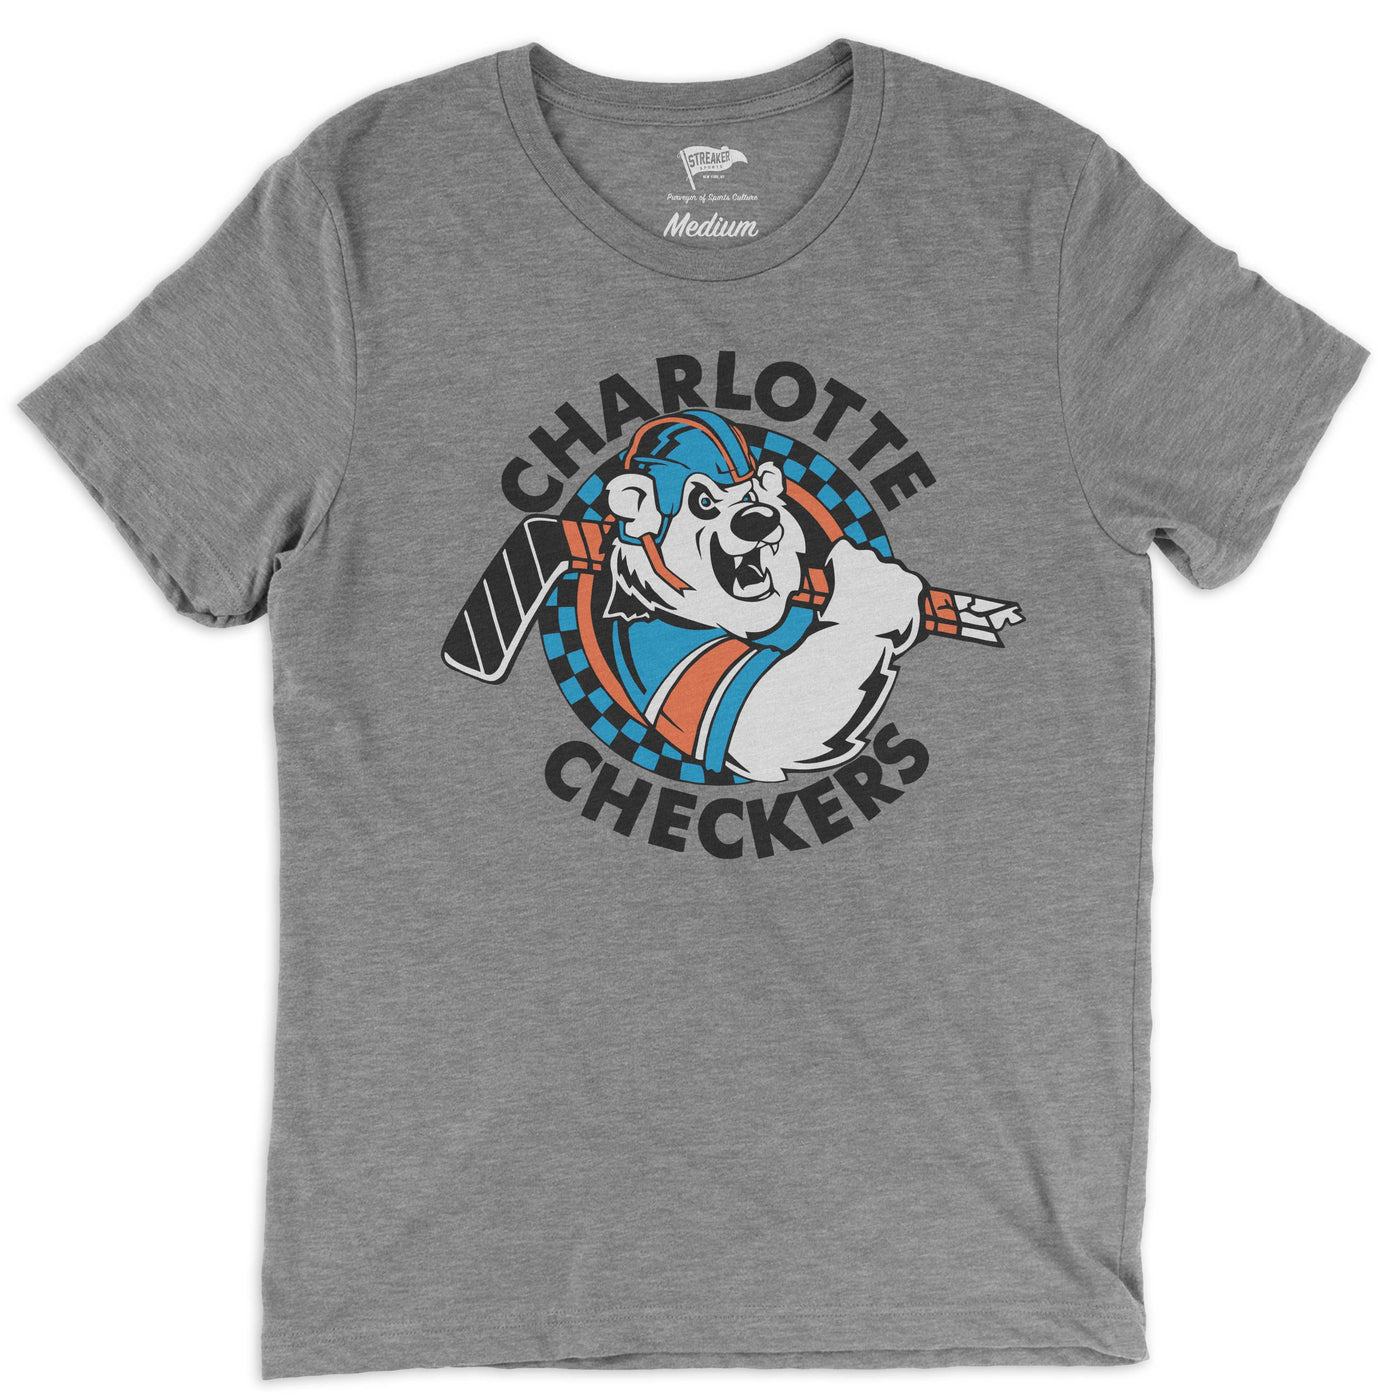 1993 Charlotte Checkers Tee - Streaker Sports